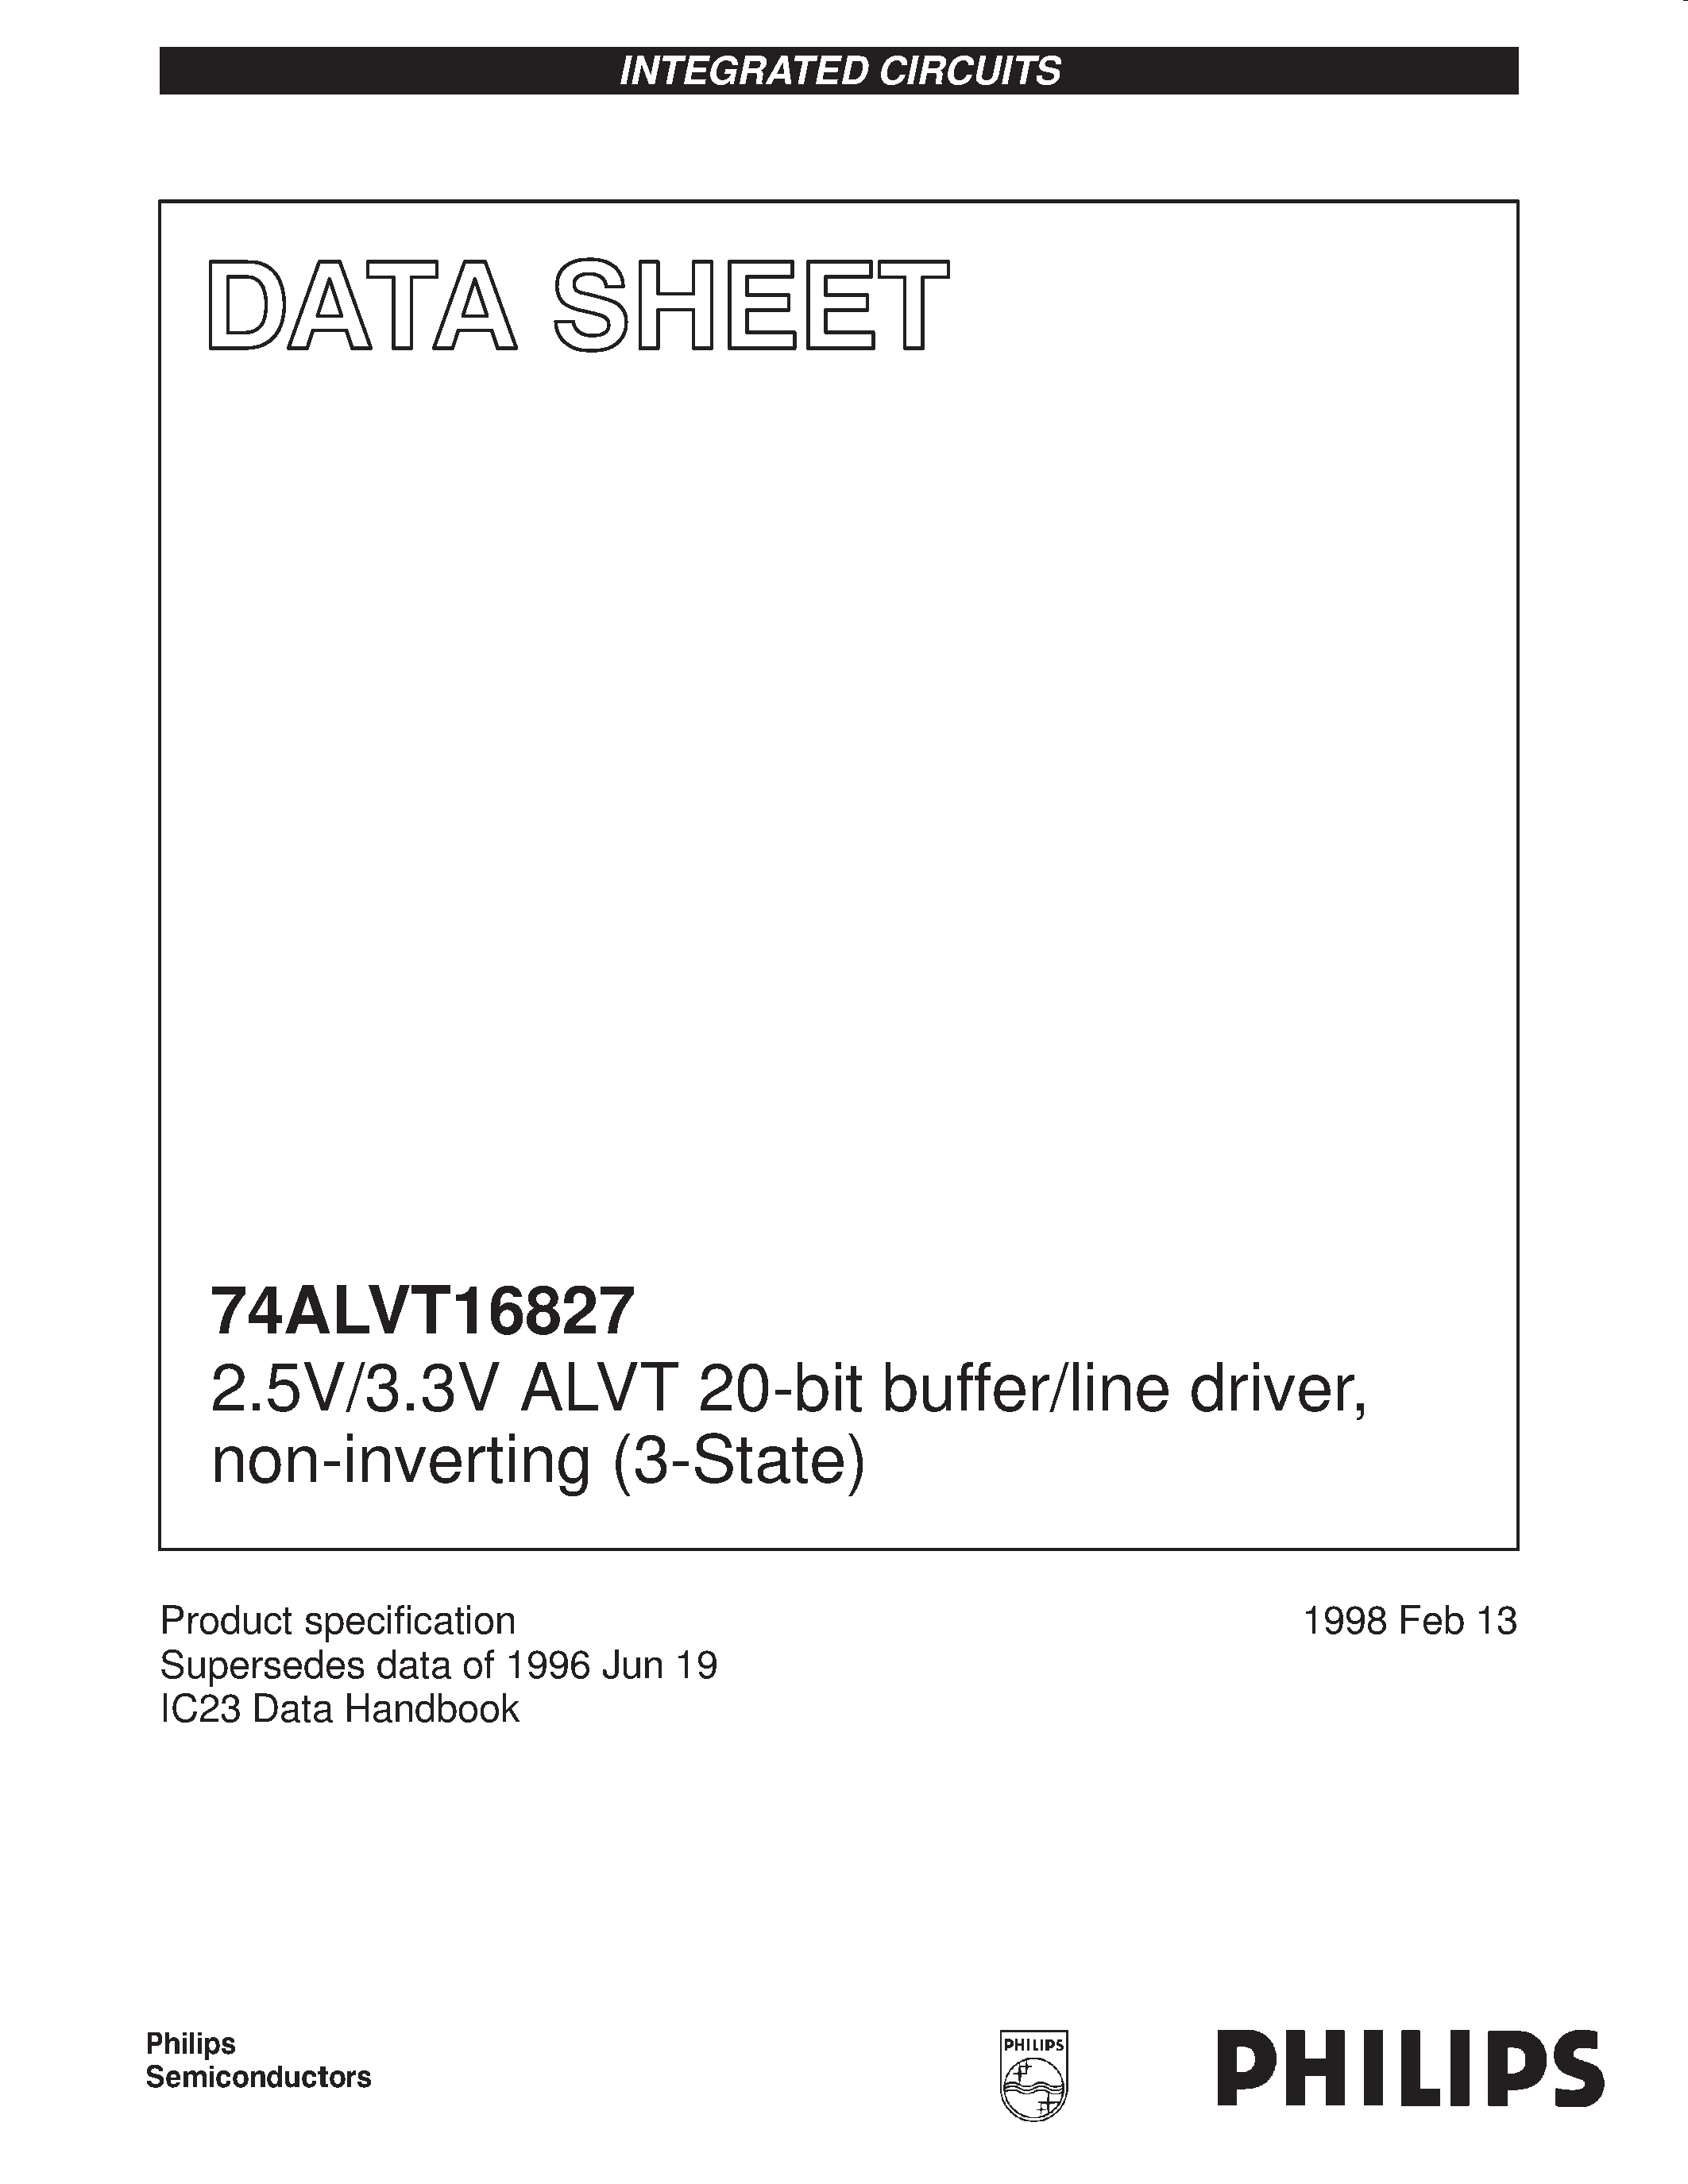 Datasheet 74ALVT16827DL - 2.5V/3.3V ALVT 20-bit buffer/line driver/ non-inverting 3-State page 1